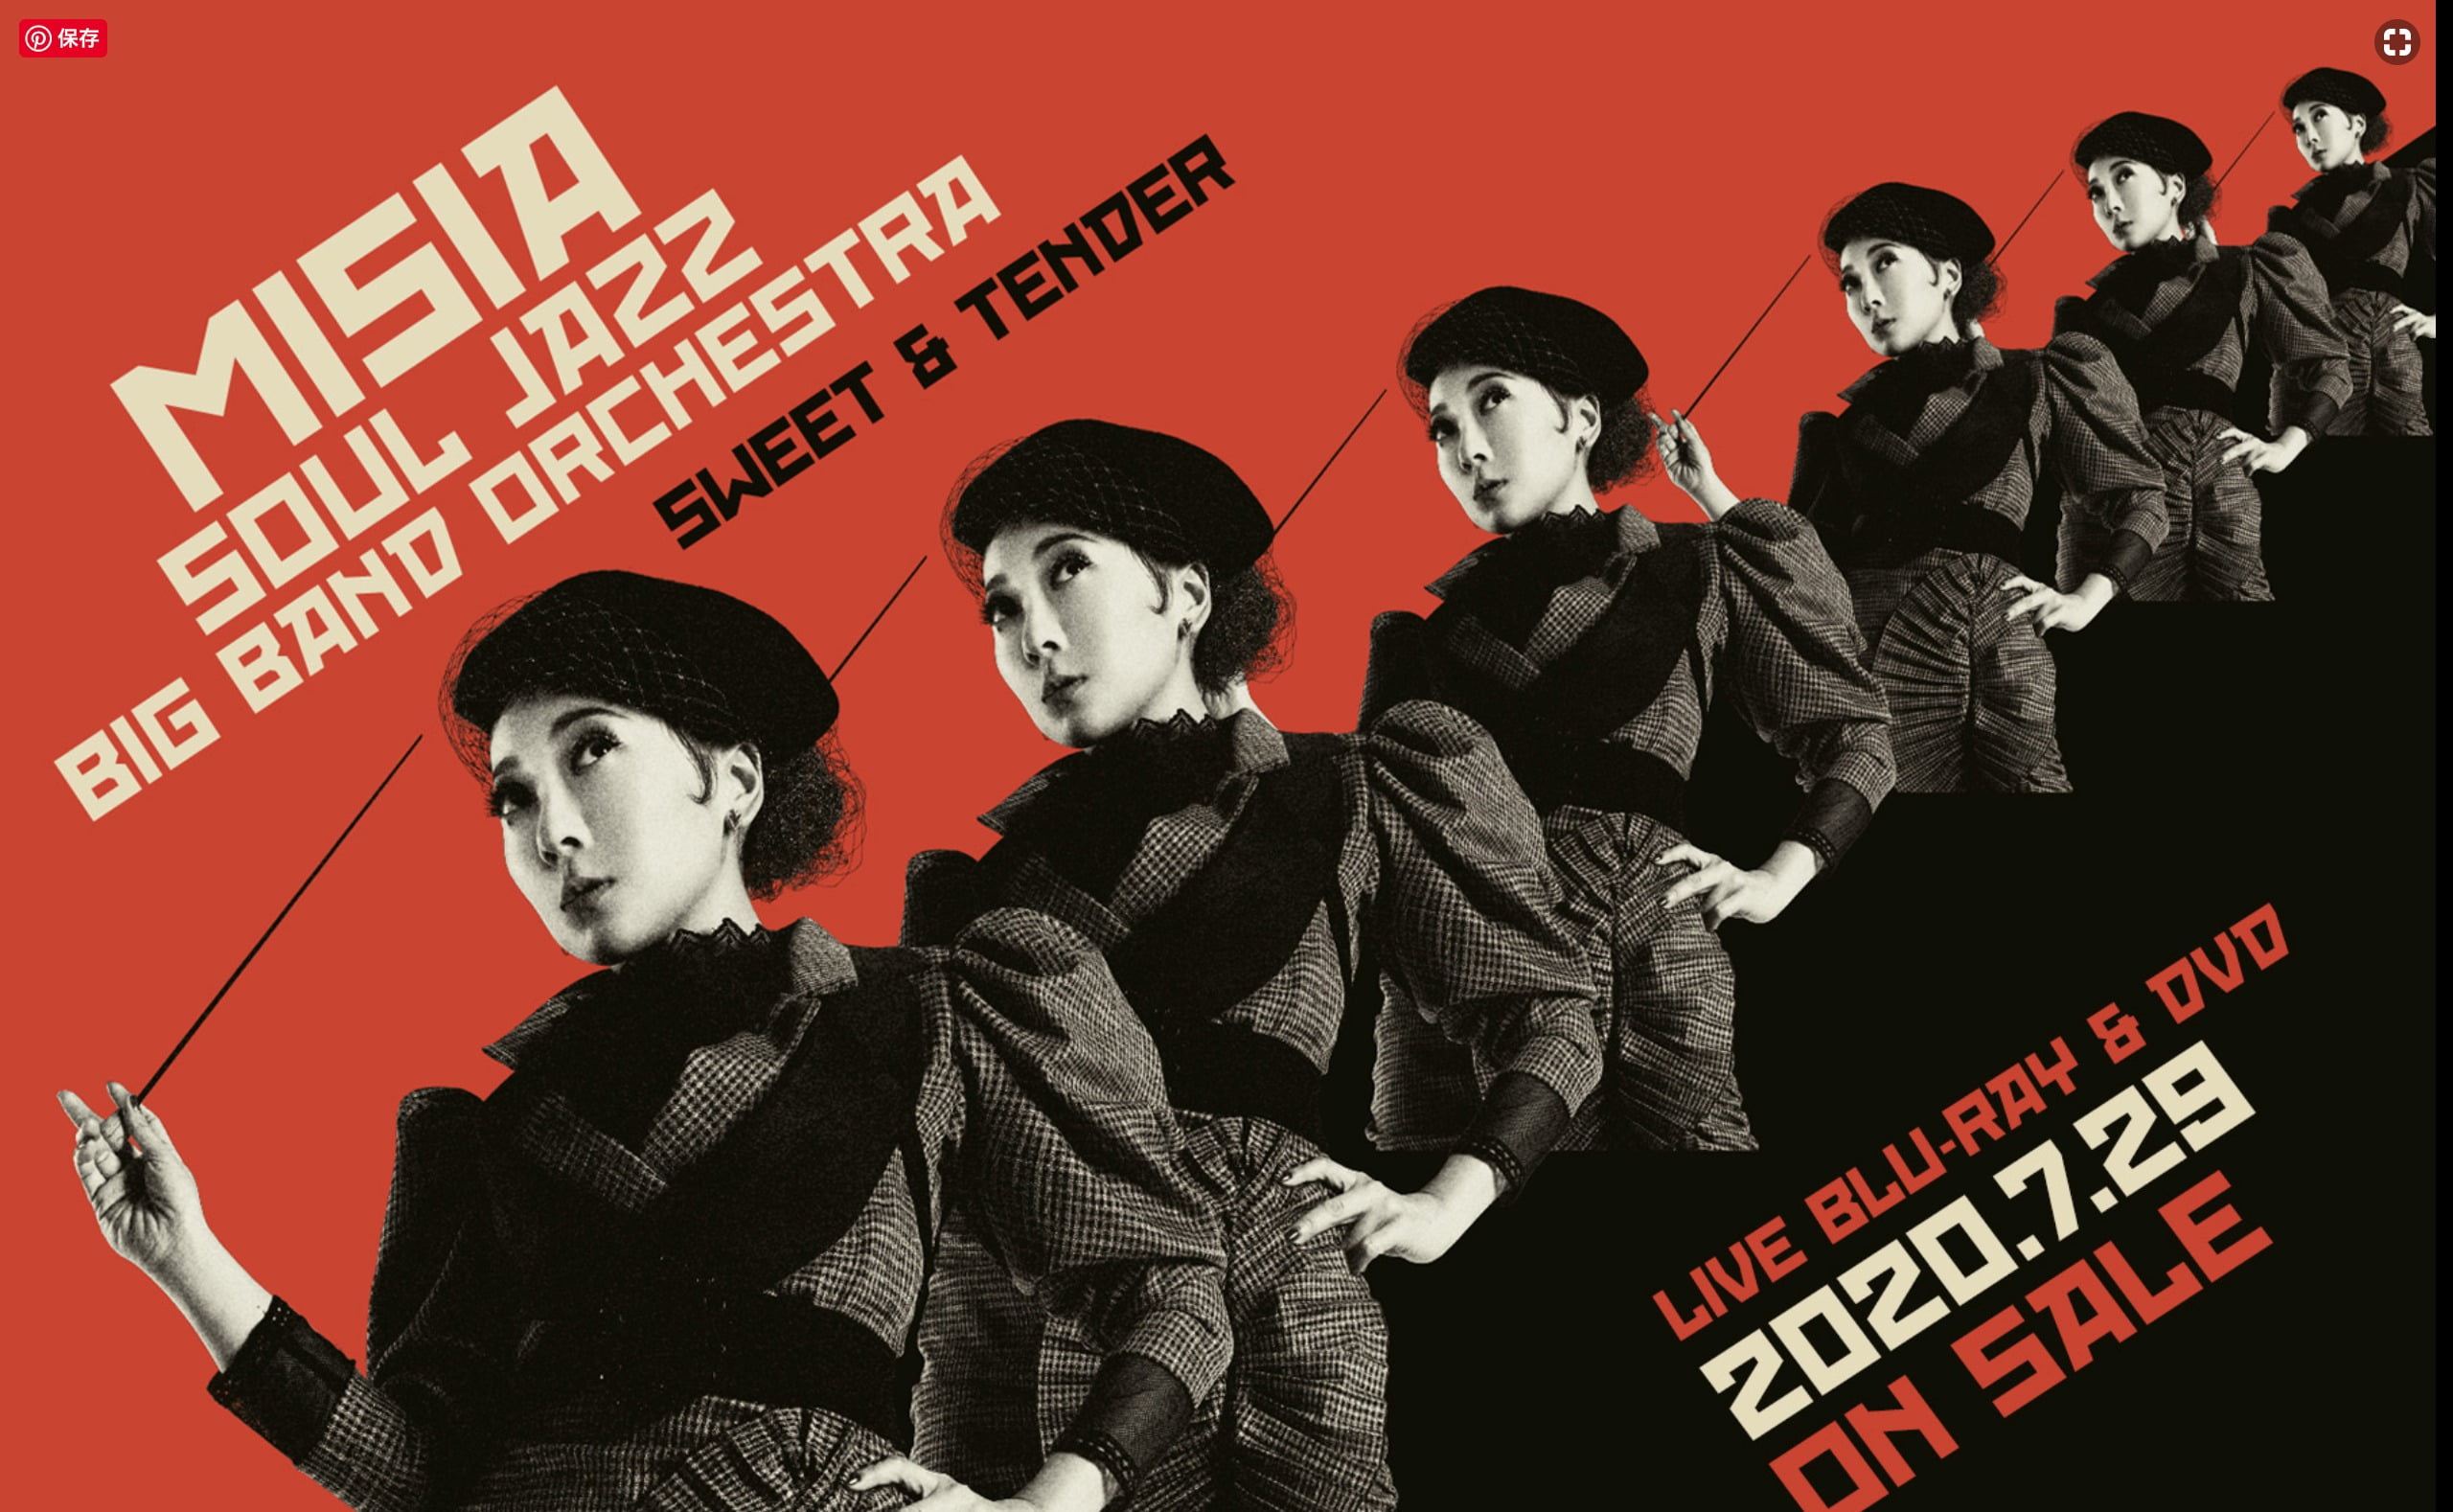 MISIA SOUL JAZZ BIG BAND ORCHESTRA – Blu-ray u0026 DVD 特設サイト | MUSIC WEB CLIPS  - バンド・アーティスト・音楽関連のWEBデザイン ギャラリーサイト